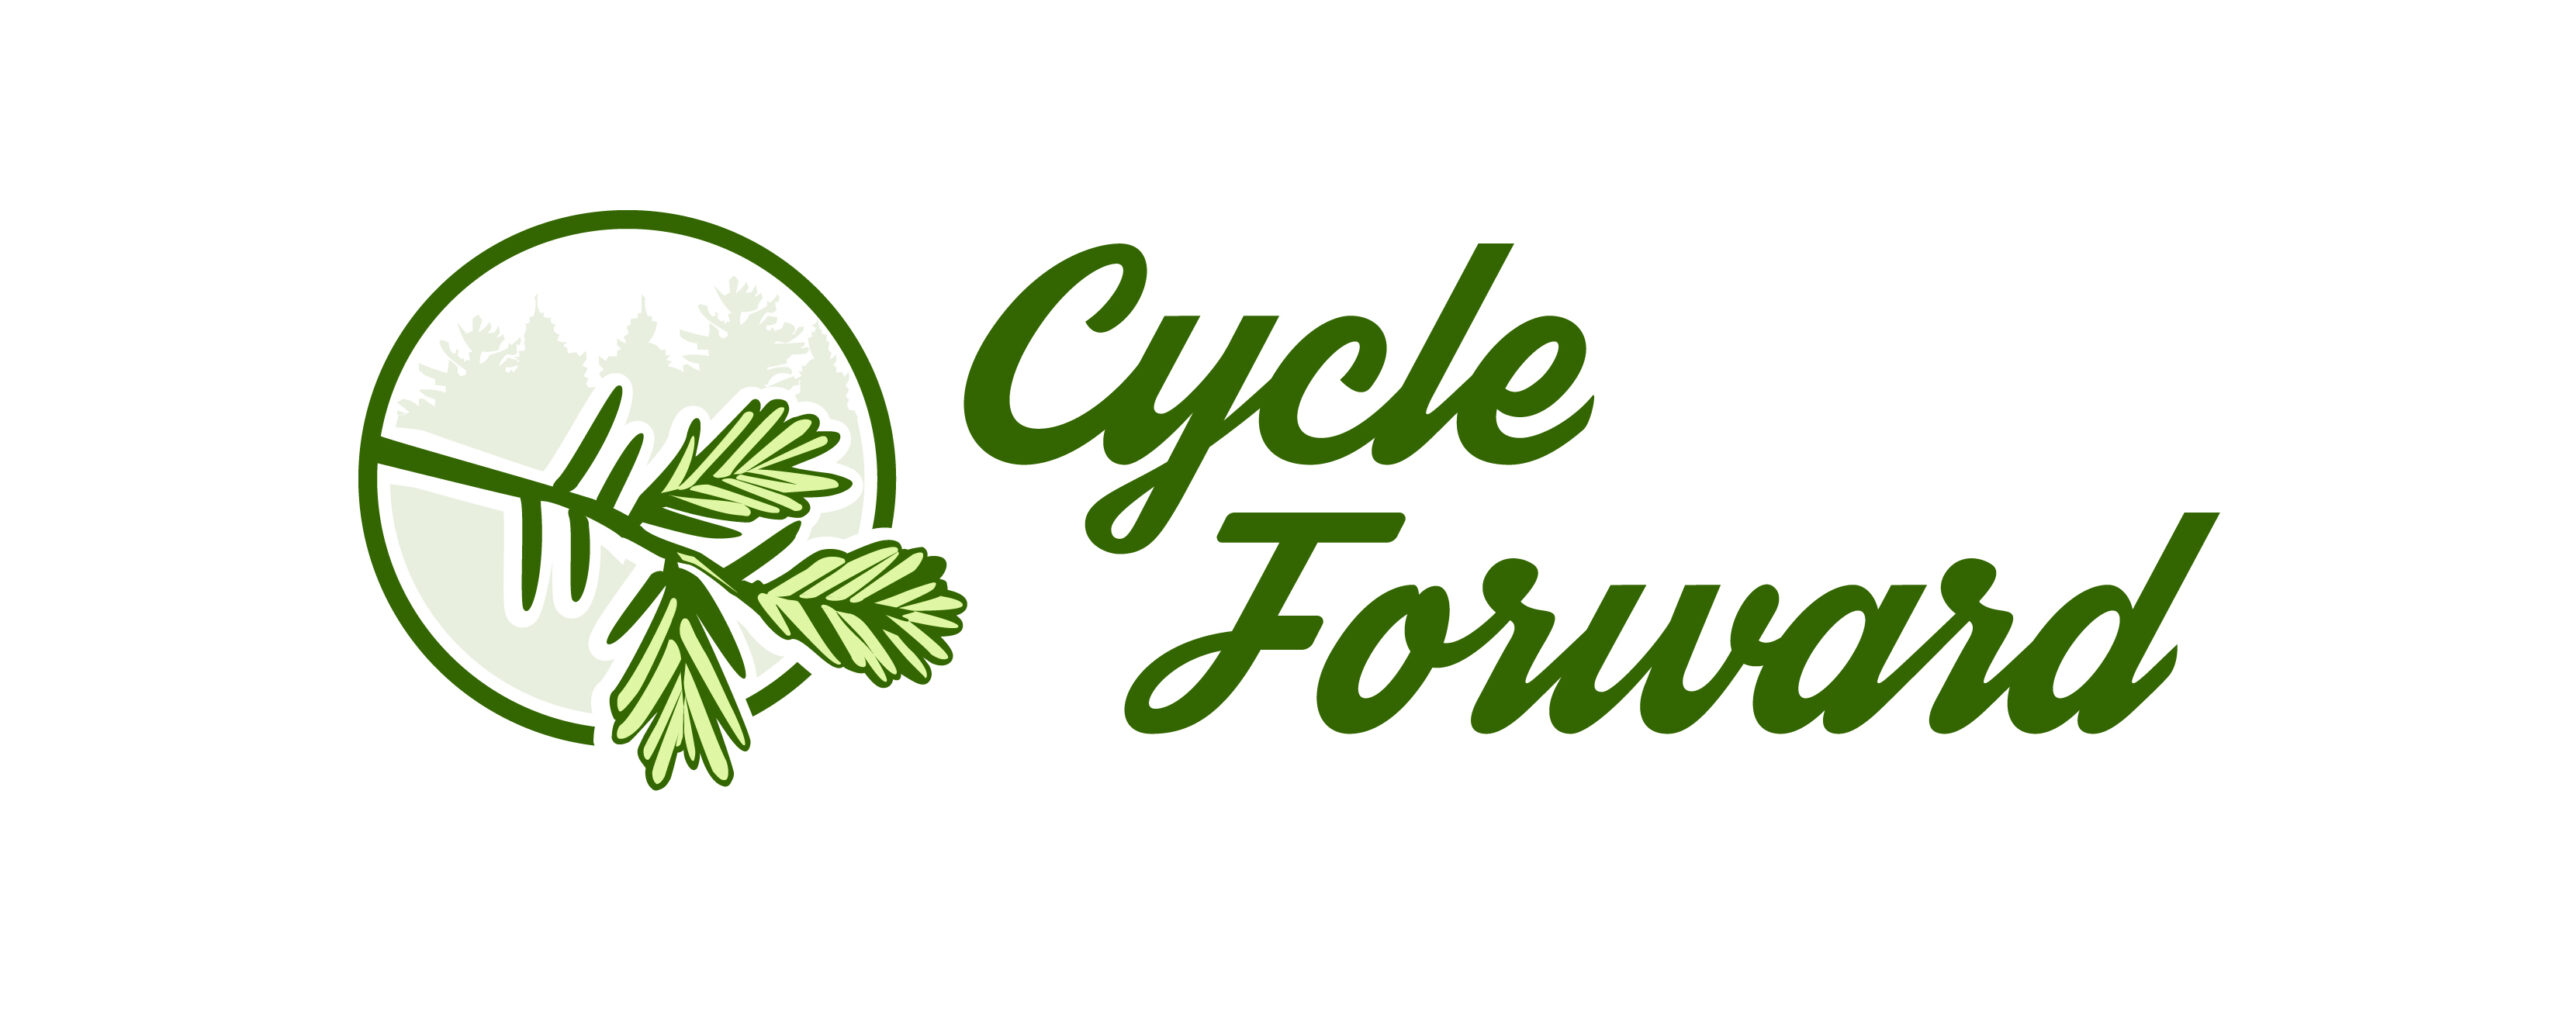 Cycle Forward logo